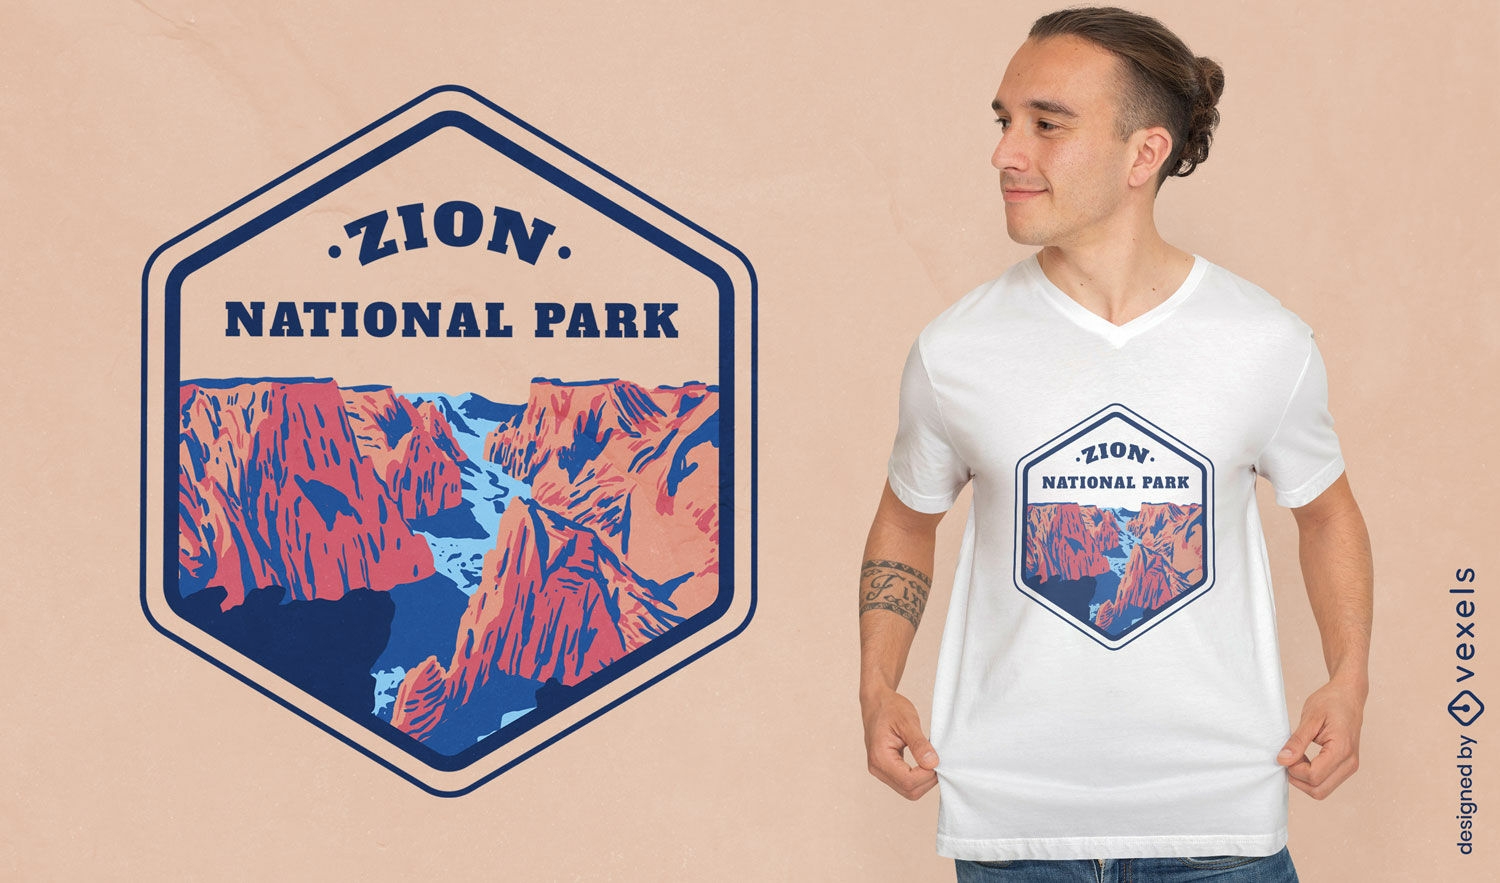 Dise?o de camiseta de paisaje del parque nacional de Zion